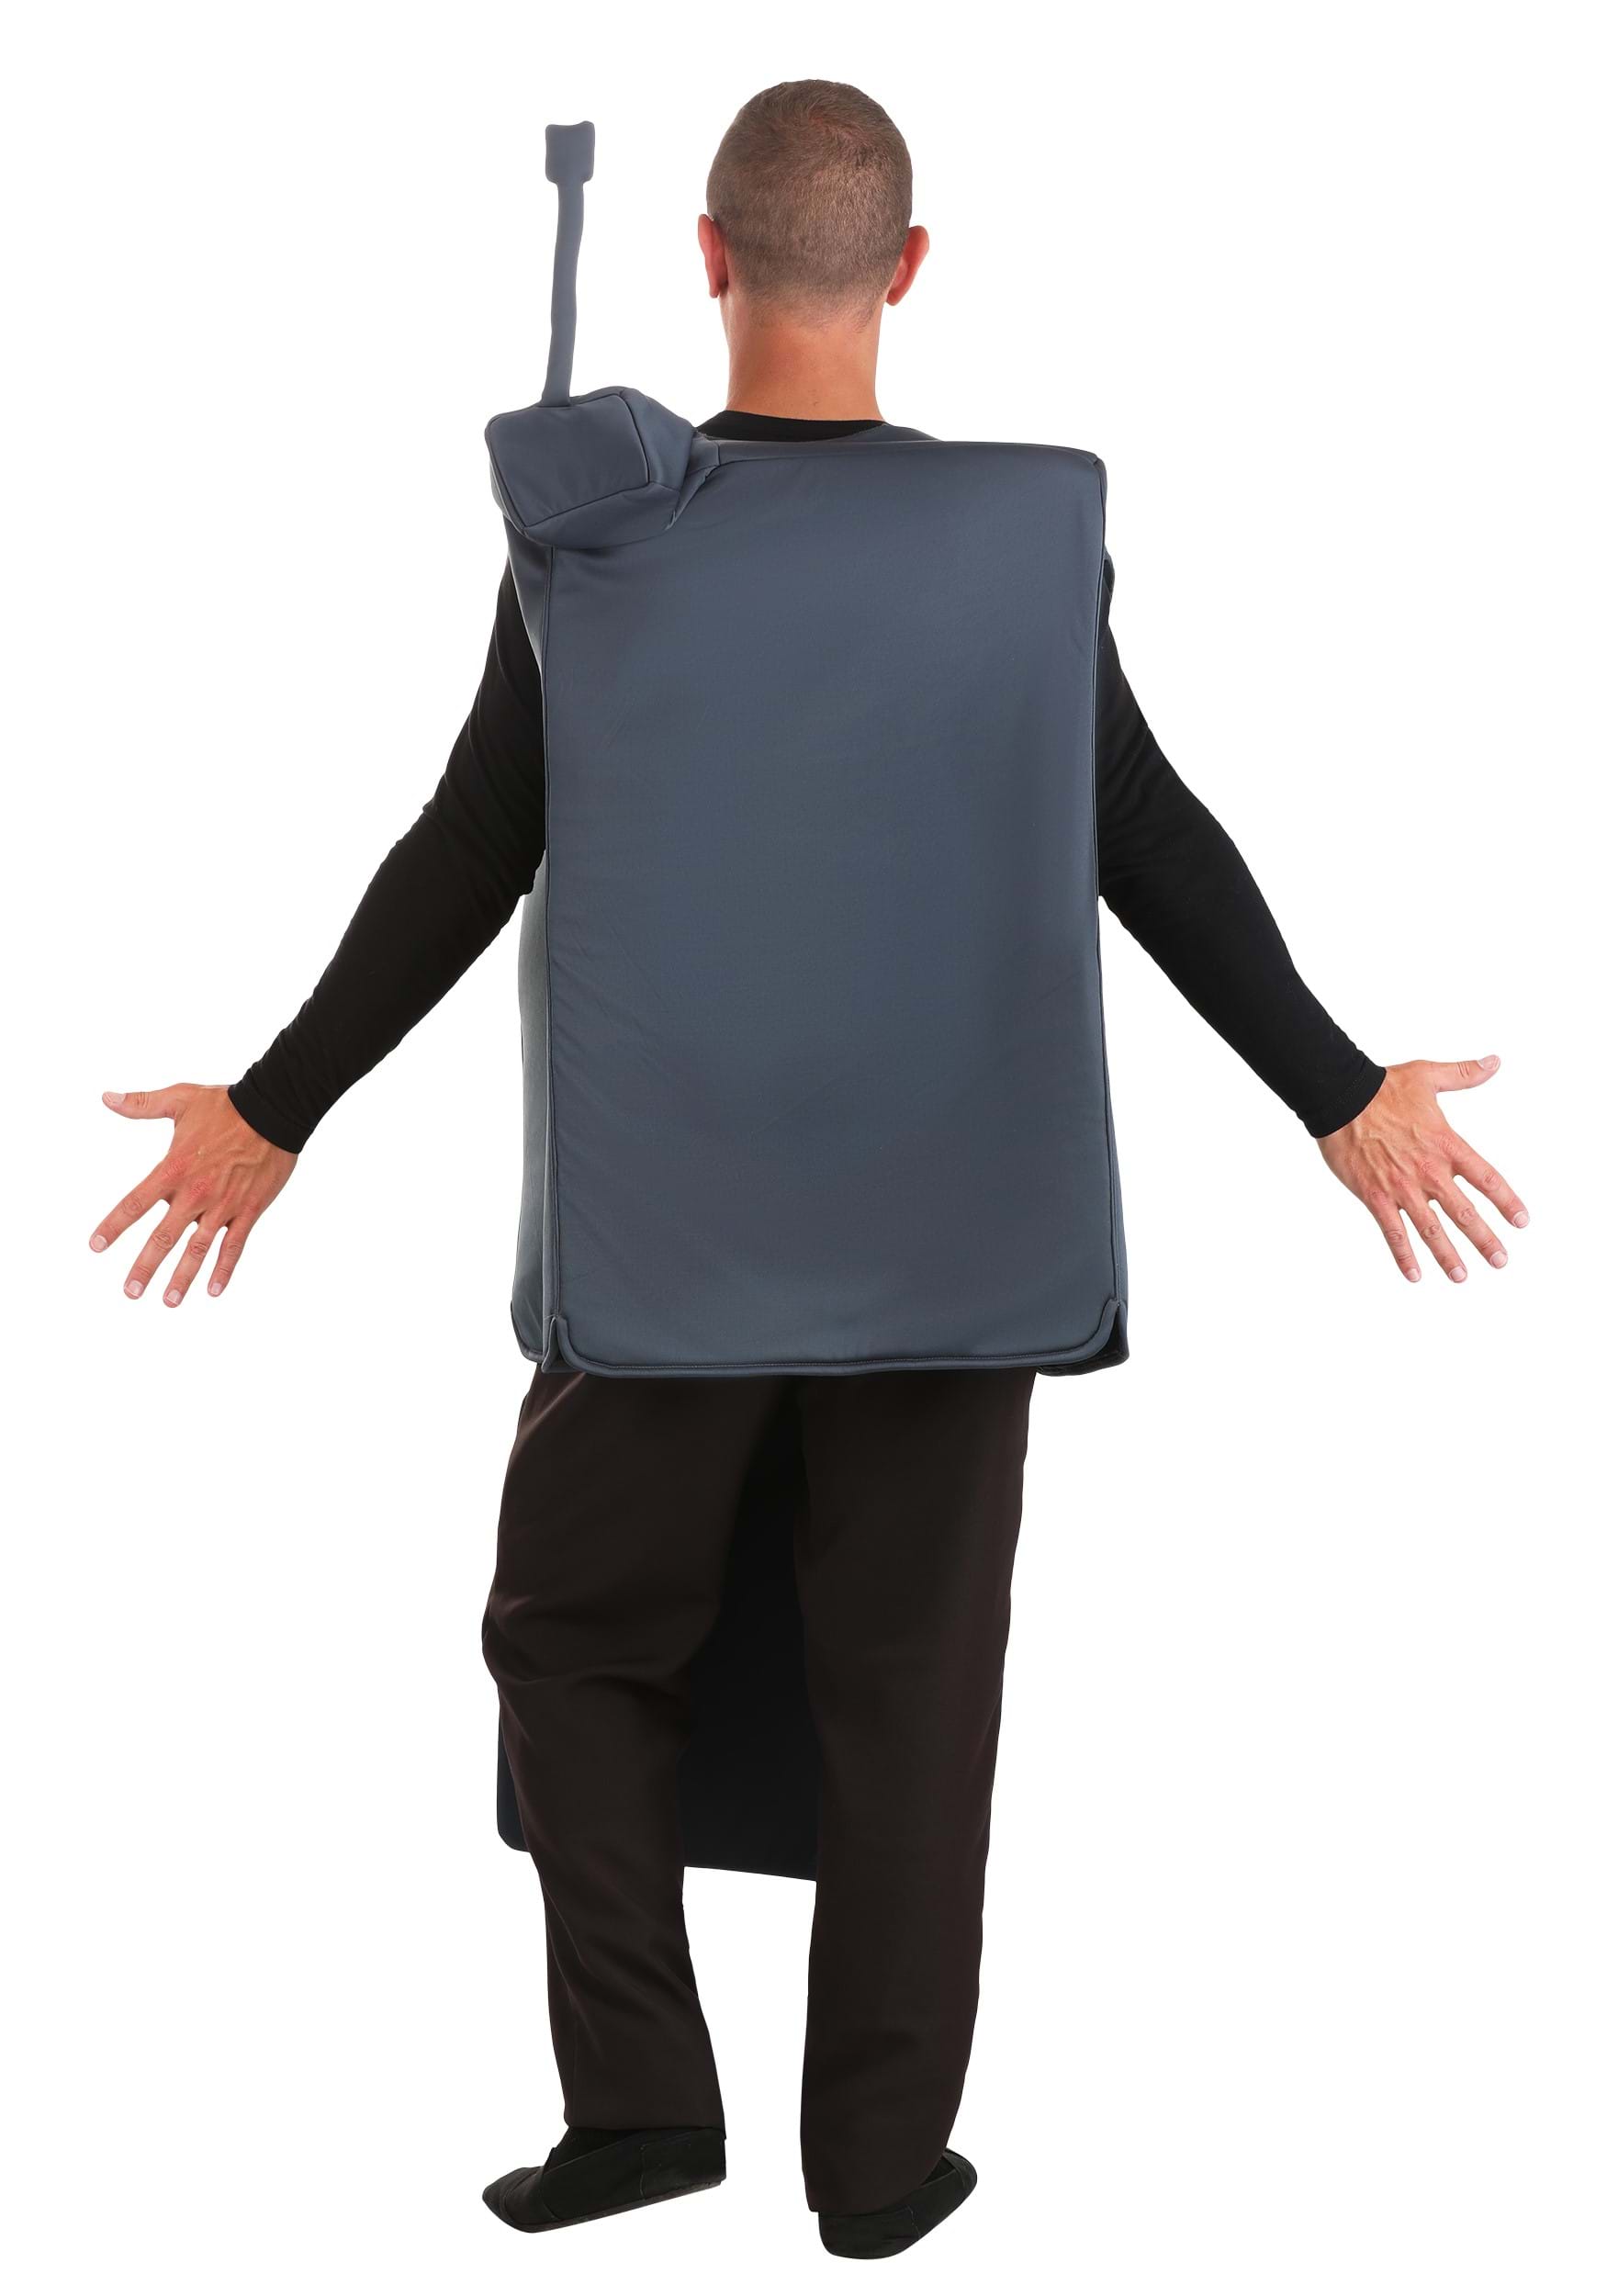 Retro Flip Phone Costume For Adults